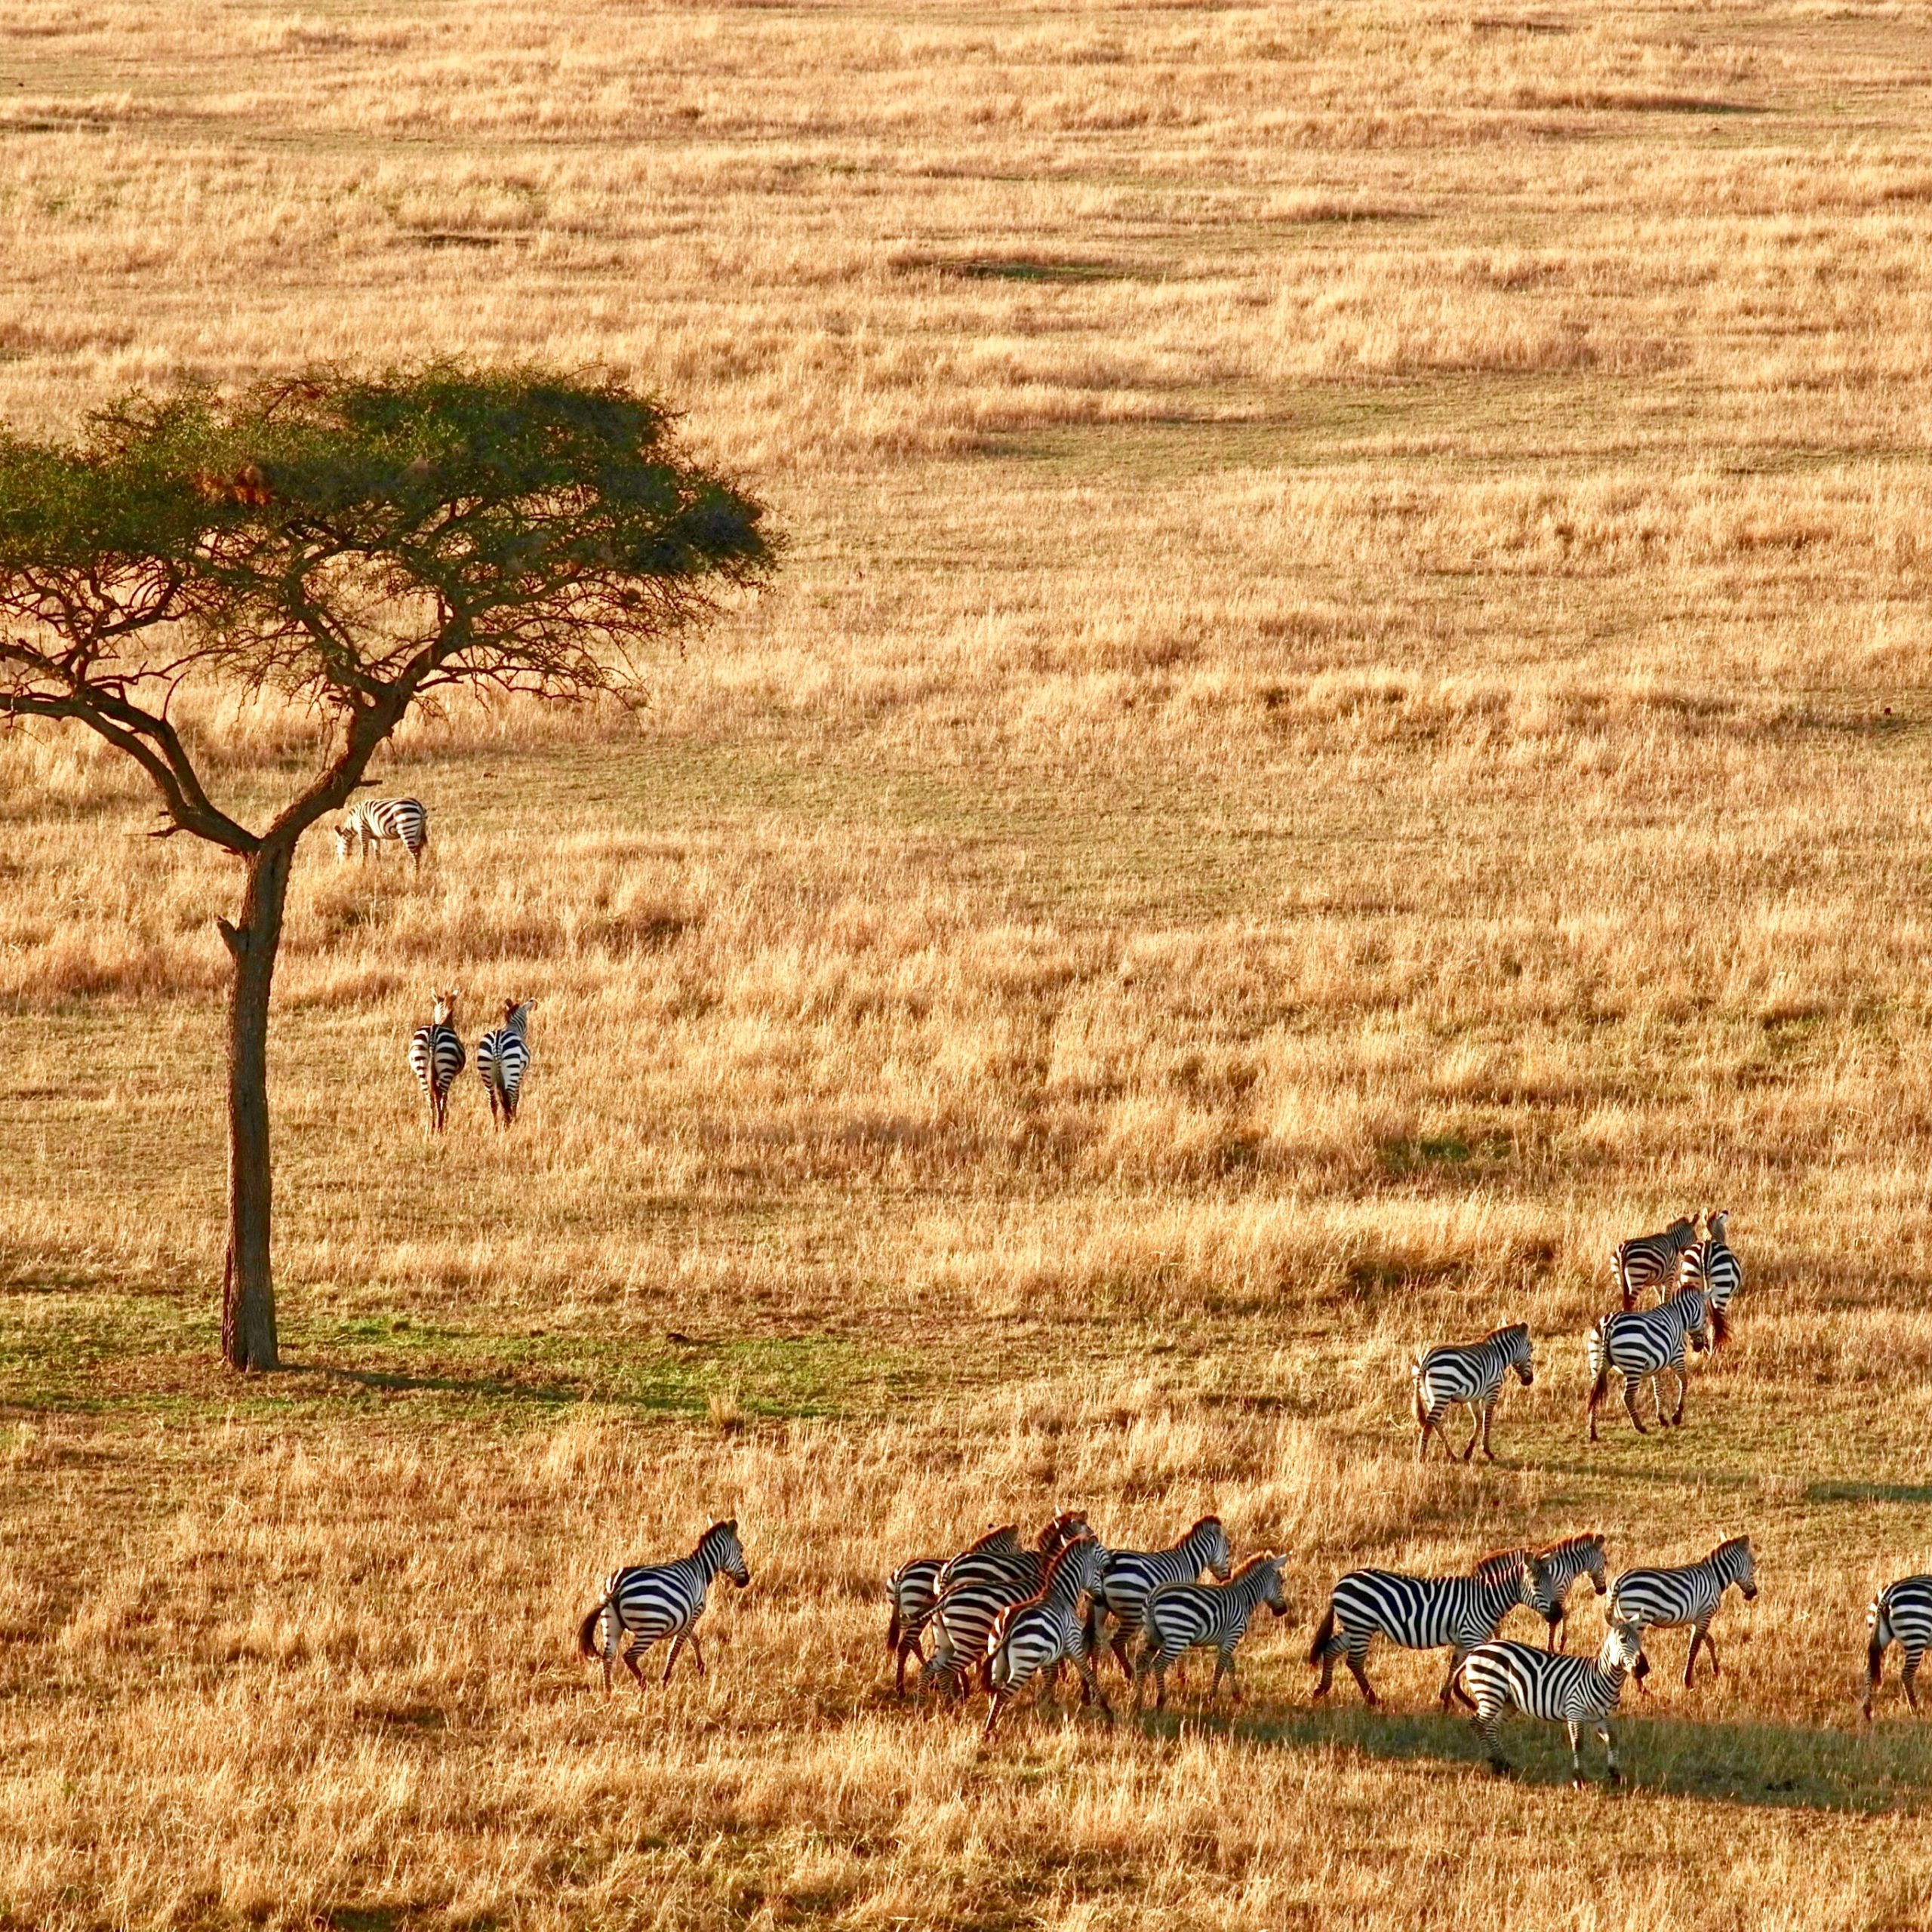 Day 9 Serengeti National Park